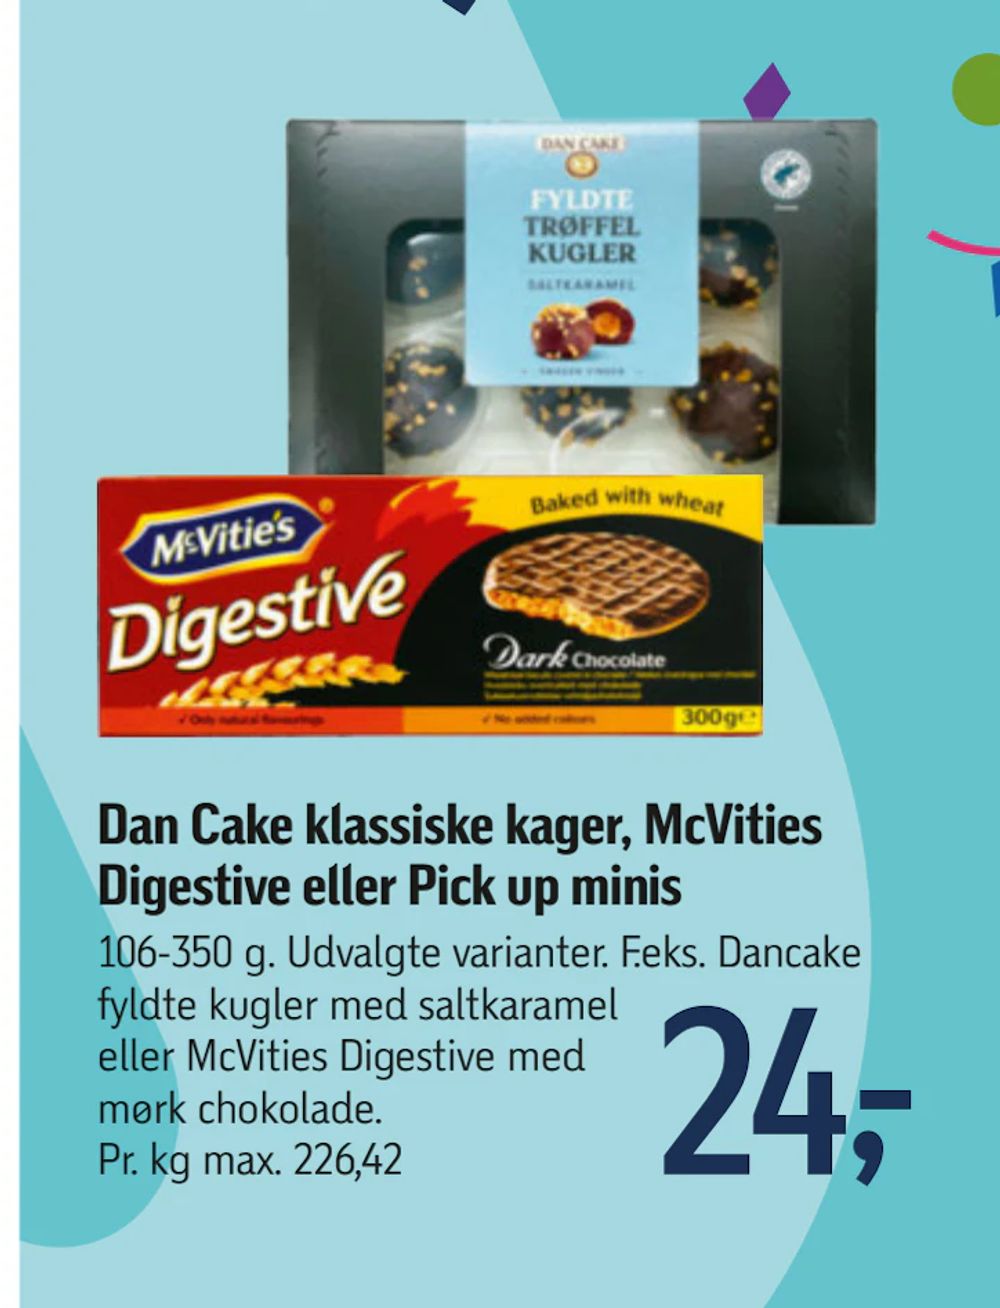 Tilbud på Dan Cake klassiske kager, McVities Digestive eller Pick up minis fra føtex til 24 kr.